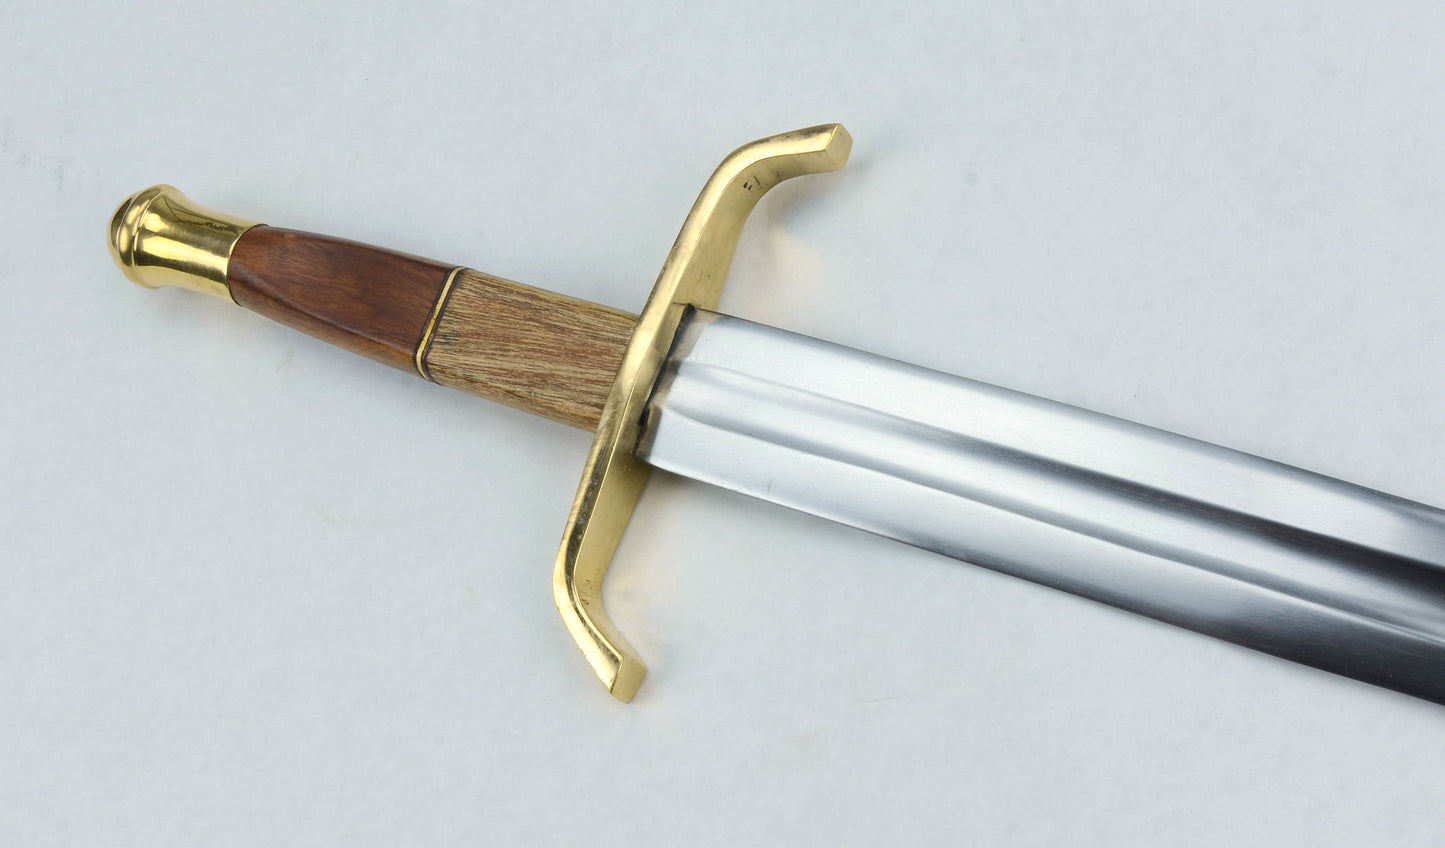 Arming Sword - Medieval High Carbon Steel Sword